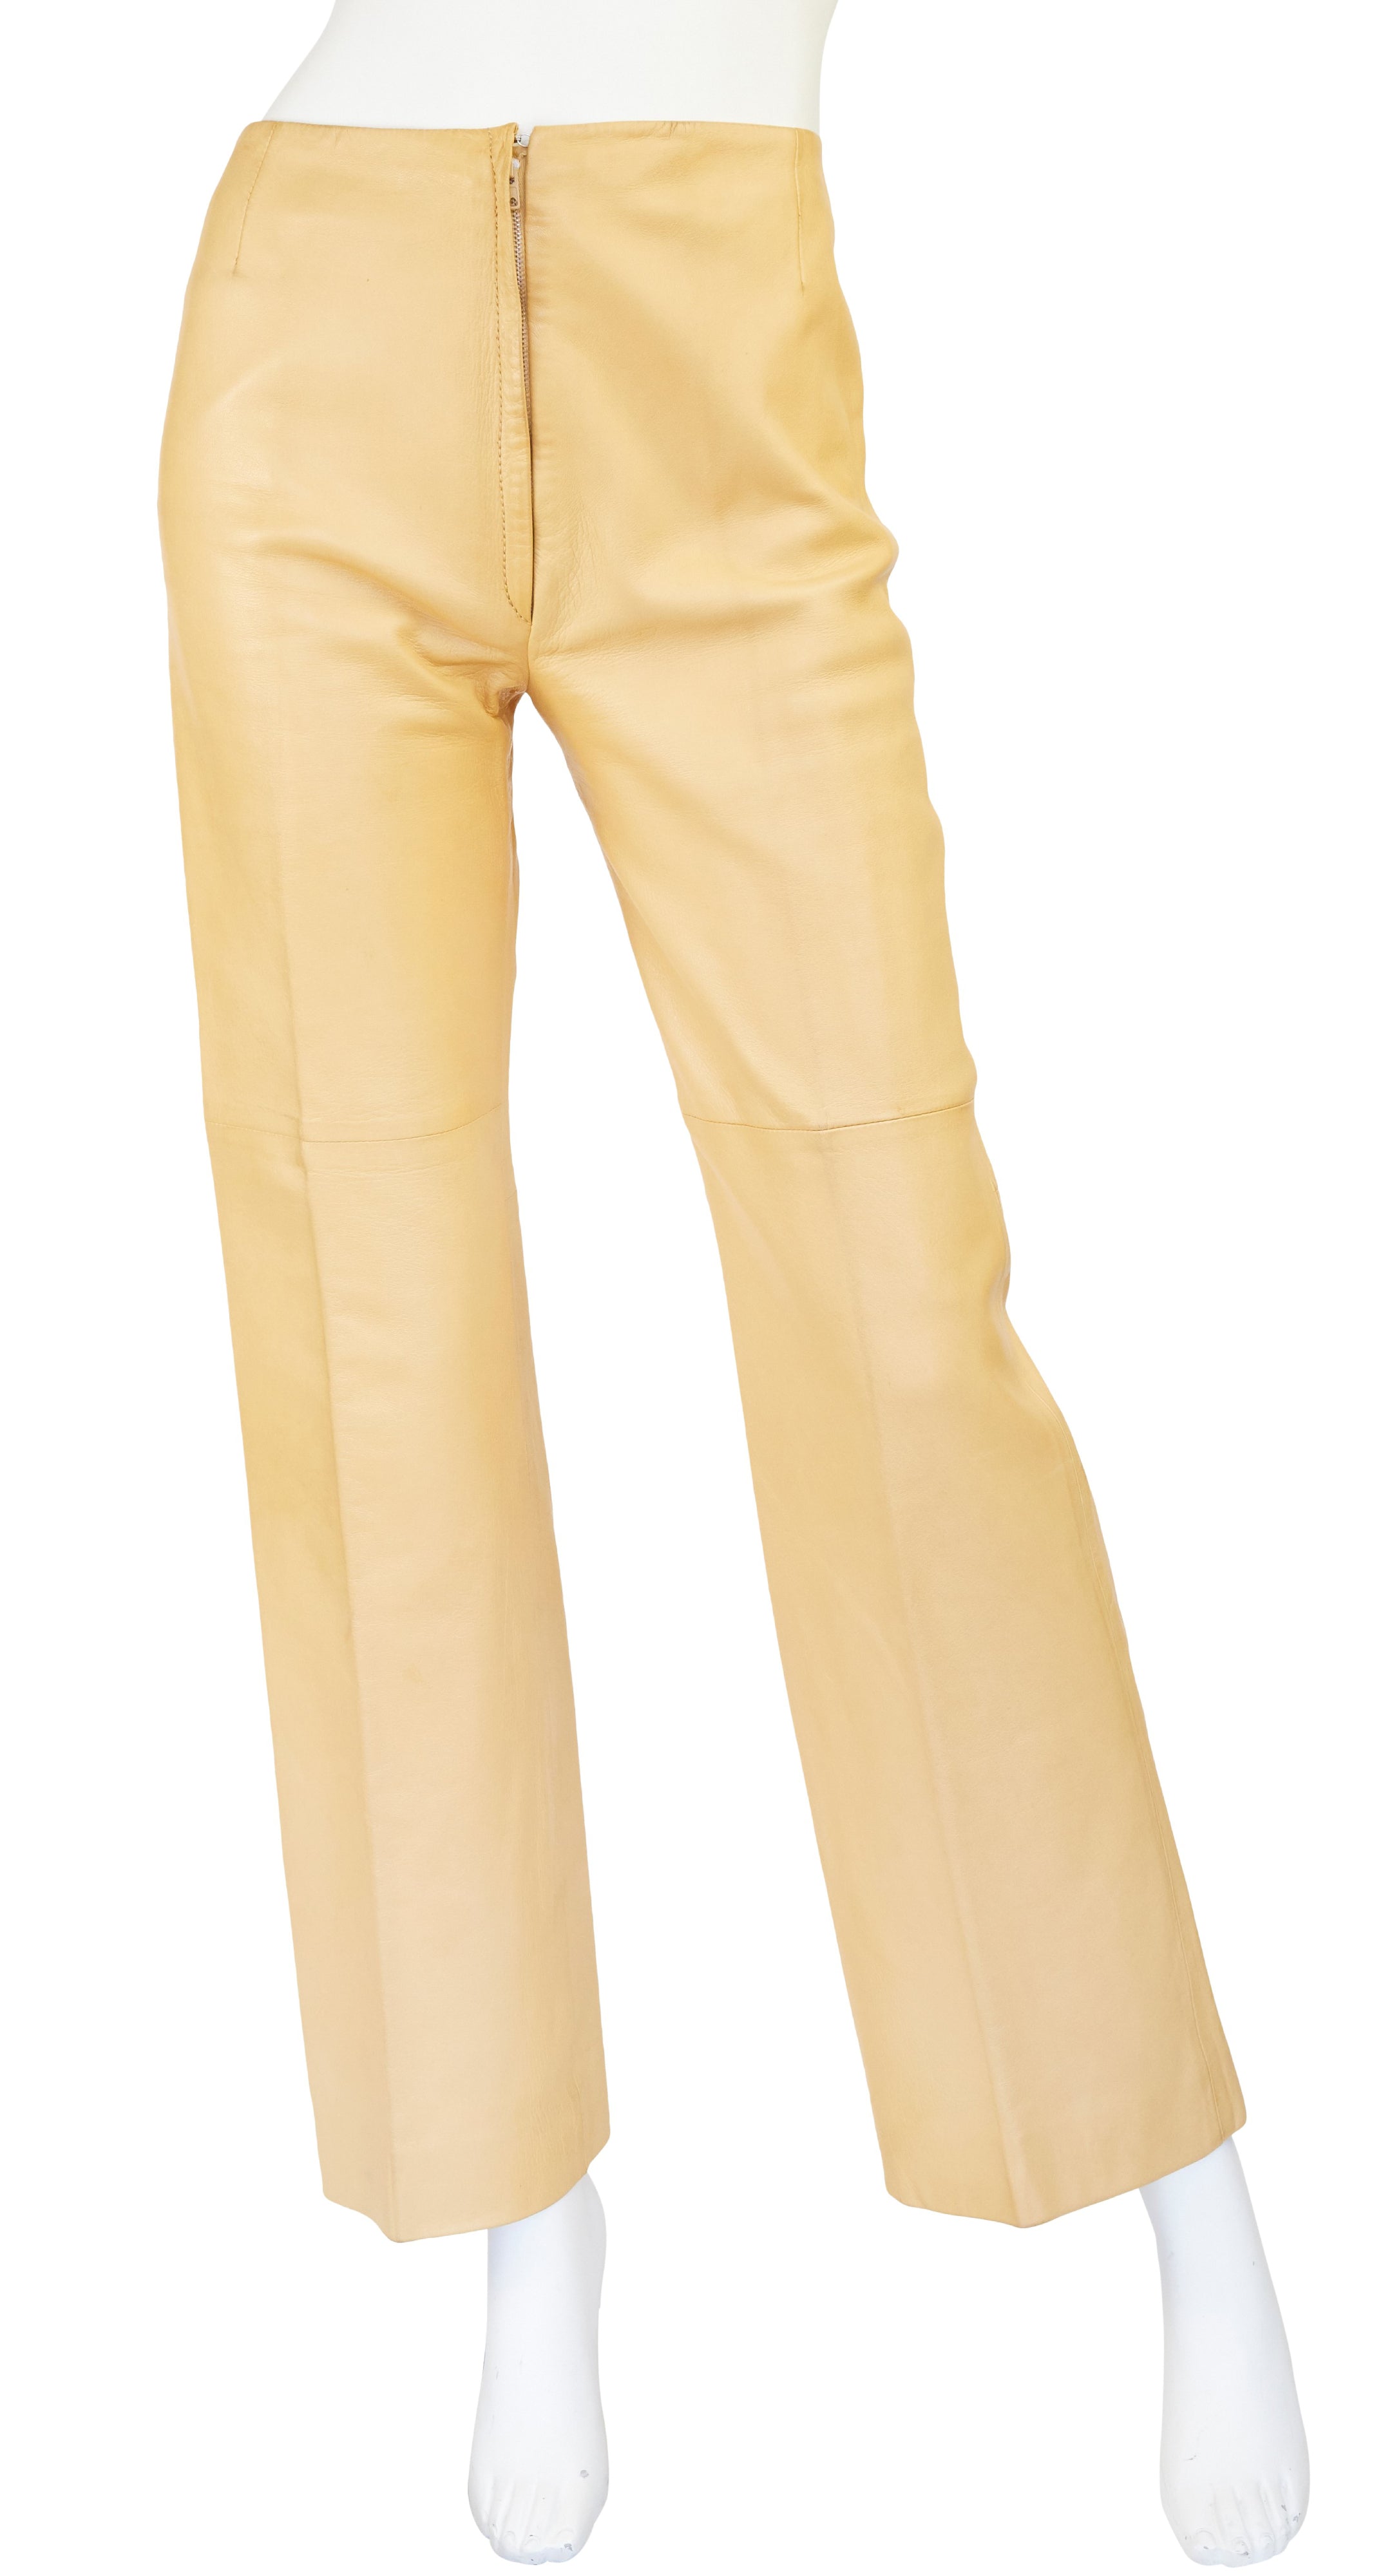 1970s Supple Tan Leather Pants